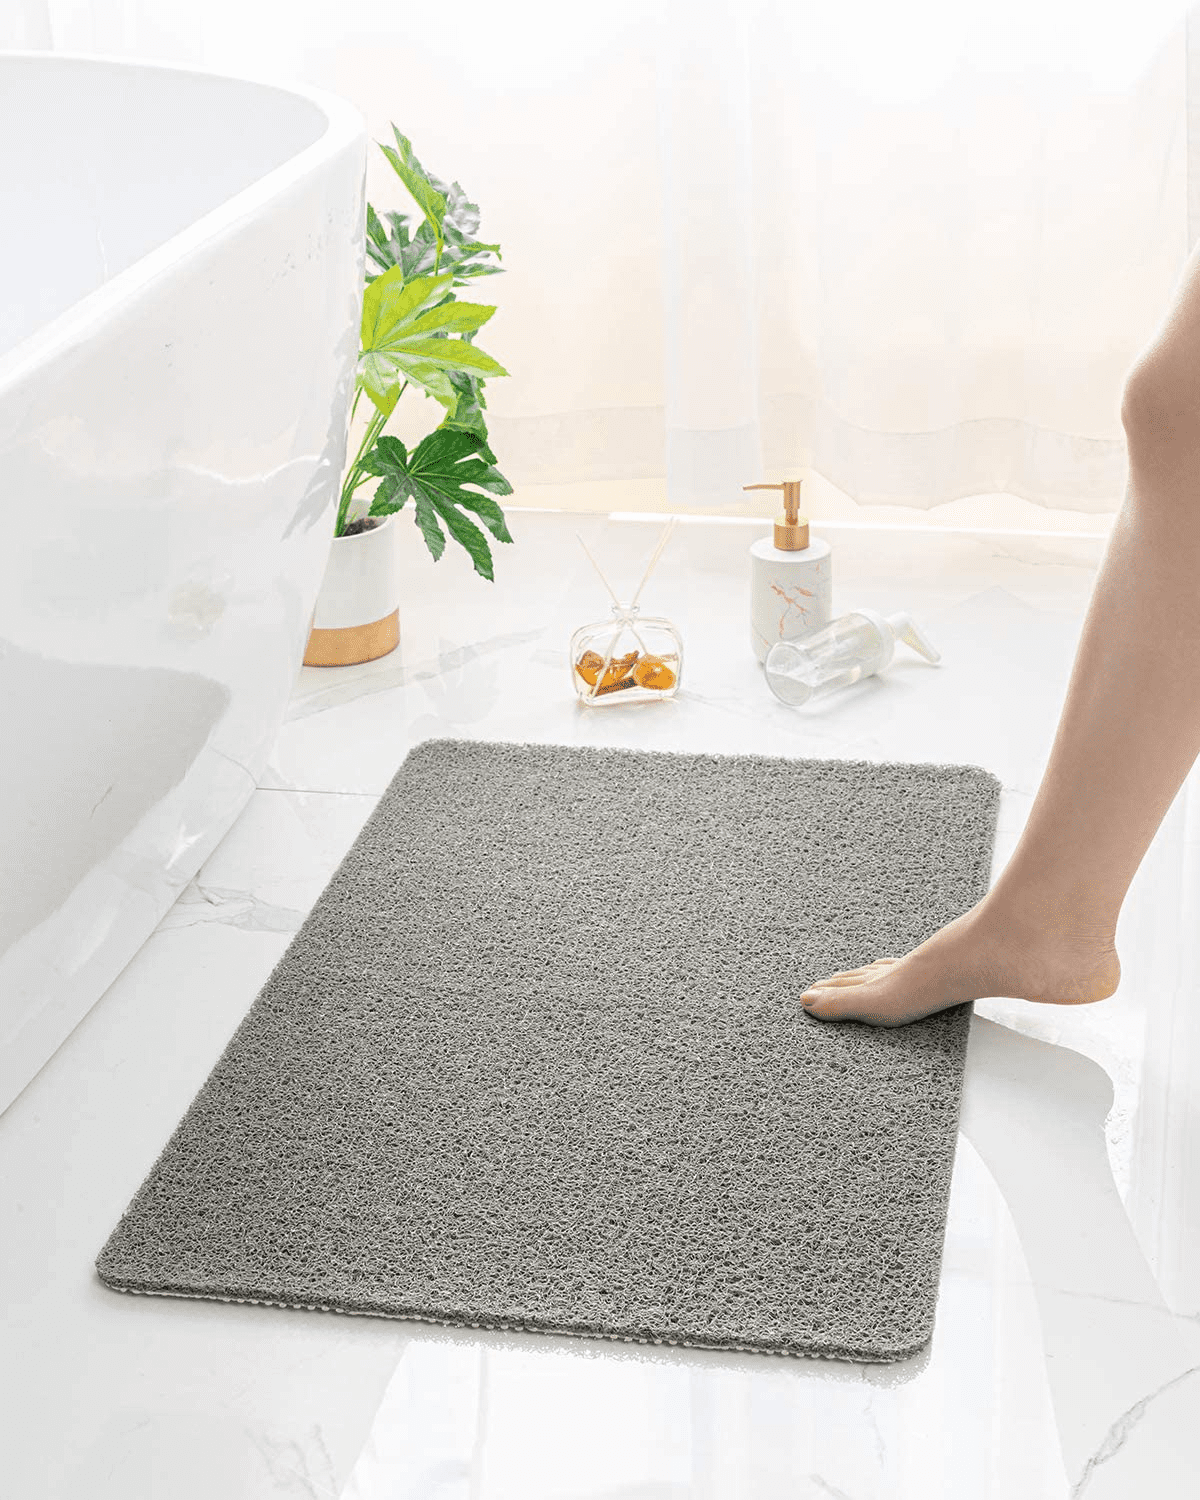 LuxStep Shower Mat Bathtub Mat,24x16 inch, Non-Slip Bath Mat with Drain,  Quick Drying PVC Loofah Bathmat for Tub,Shower,Bathroom (Phthalate  Free,Grey)